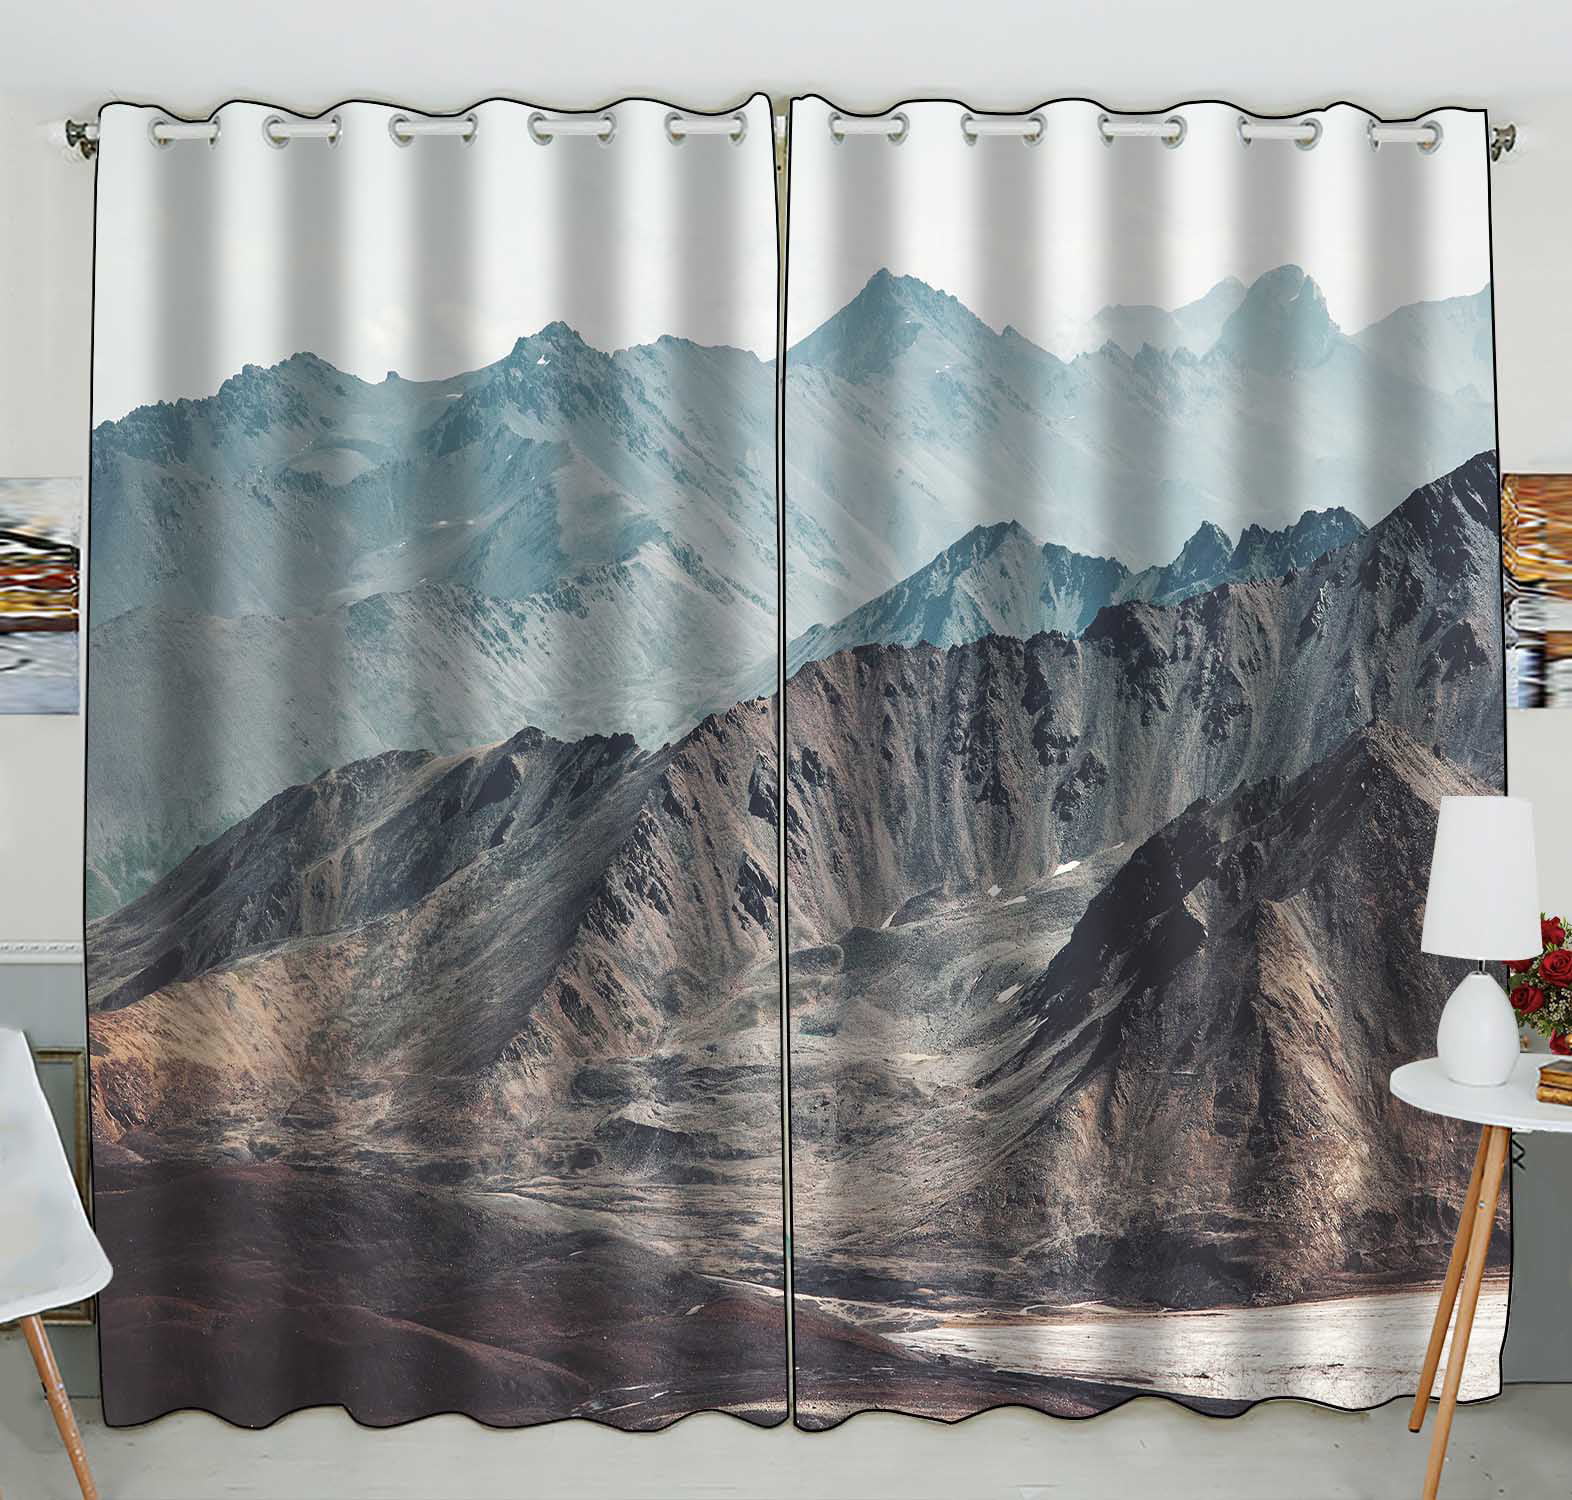 Sunset Mountain Dinosaur Hot 3D Printing Window Curtains Blockout Drapes Fabric 